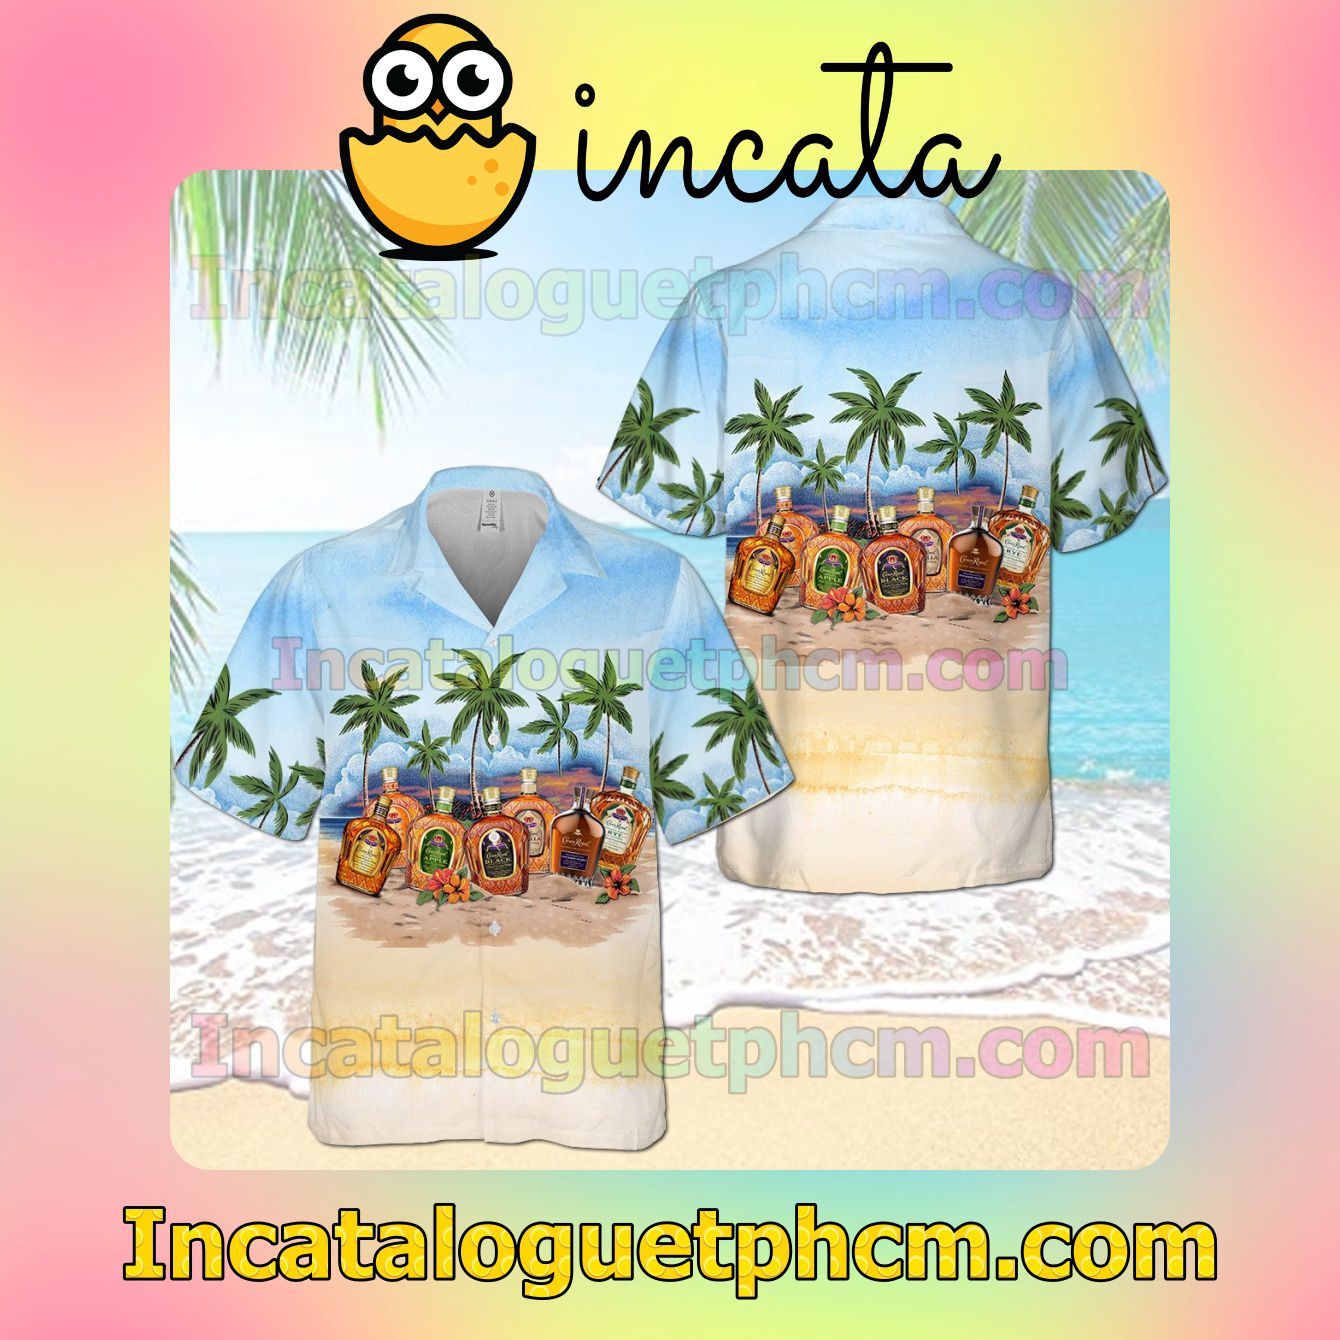 Mike's Hard Lemonade Palm Tree White Yellow Button Shirt And Swim Trunk